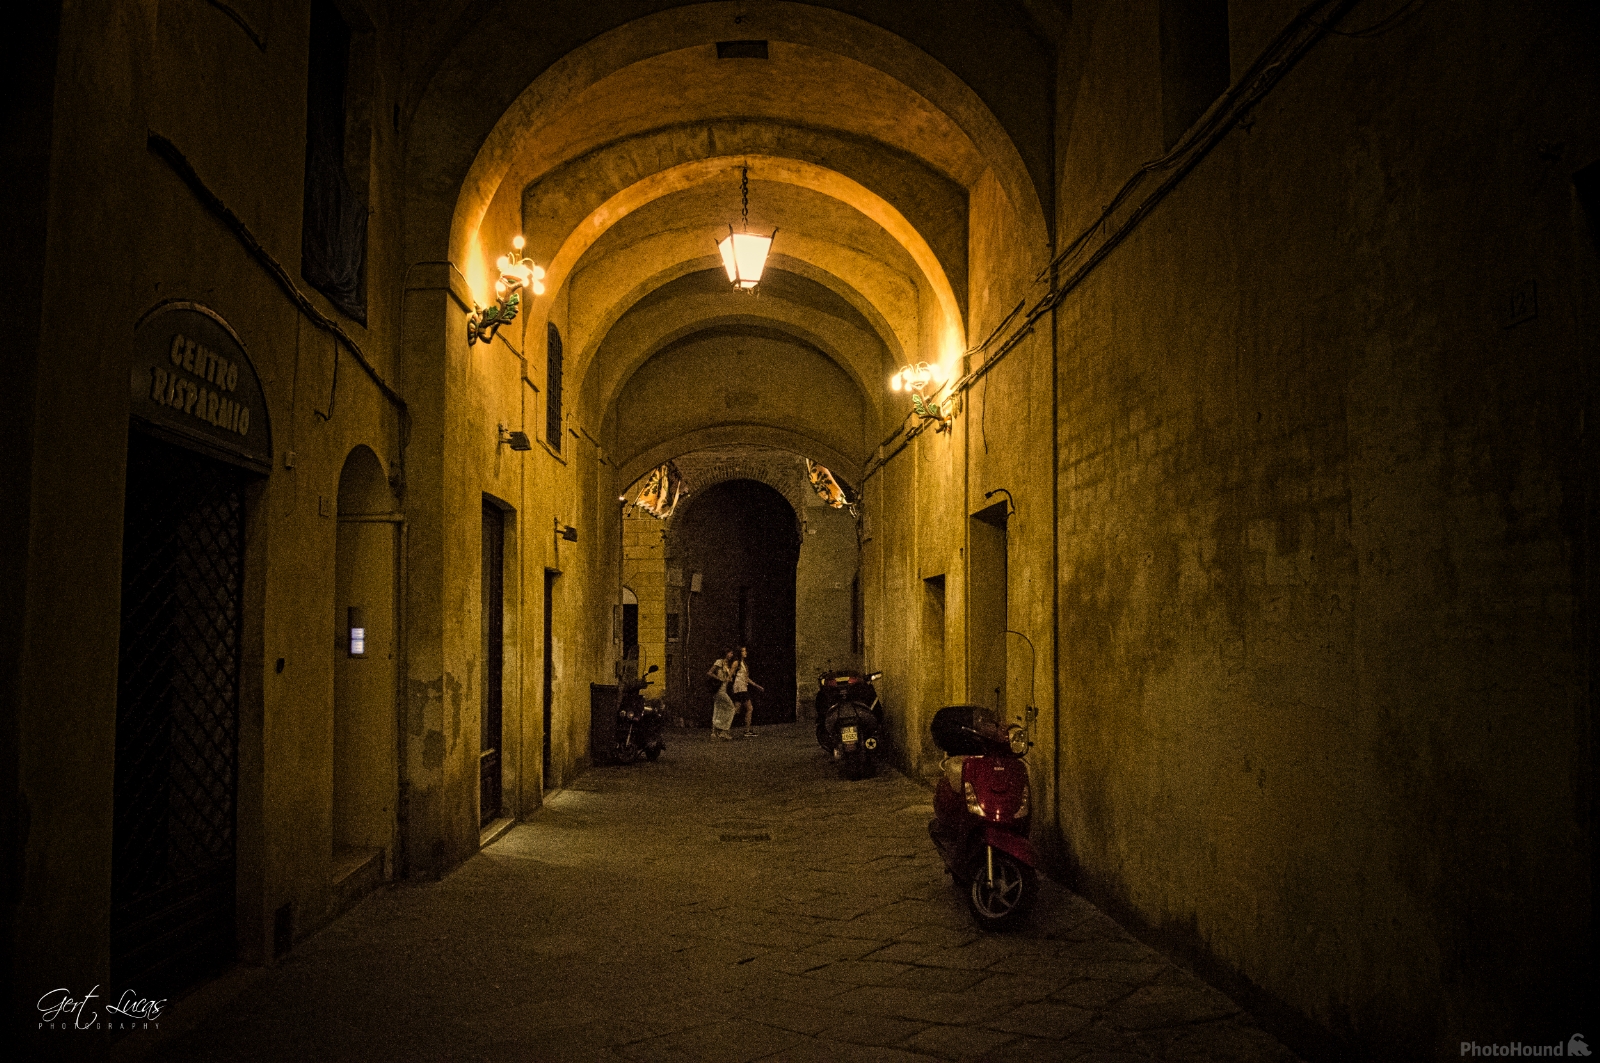 Image of Via da Citta, Siena by Gert Lucas